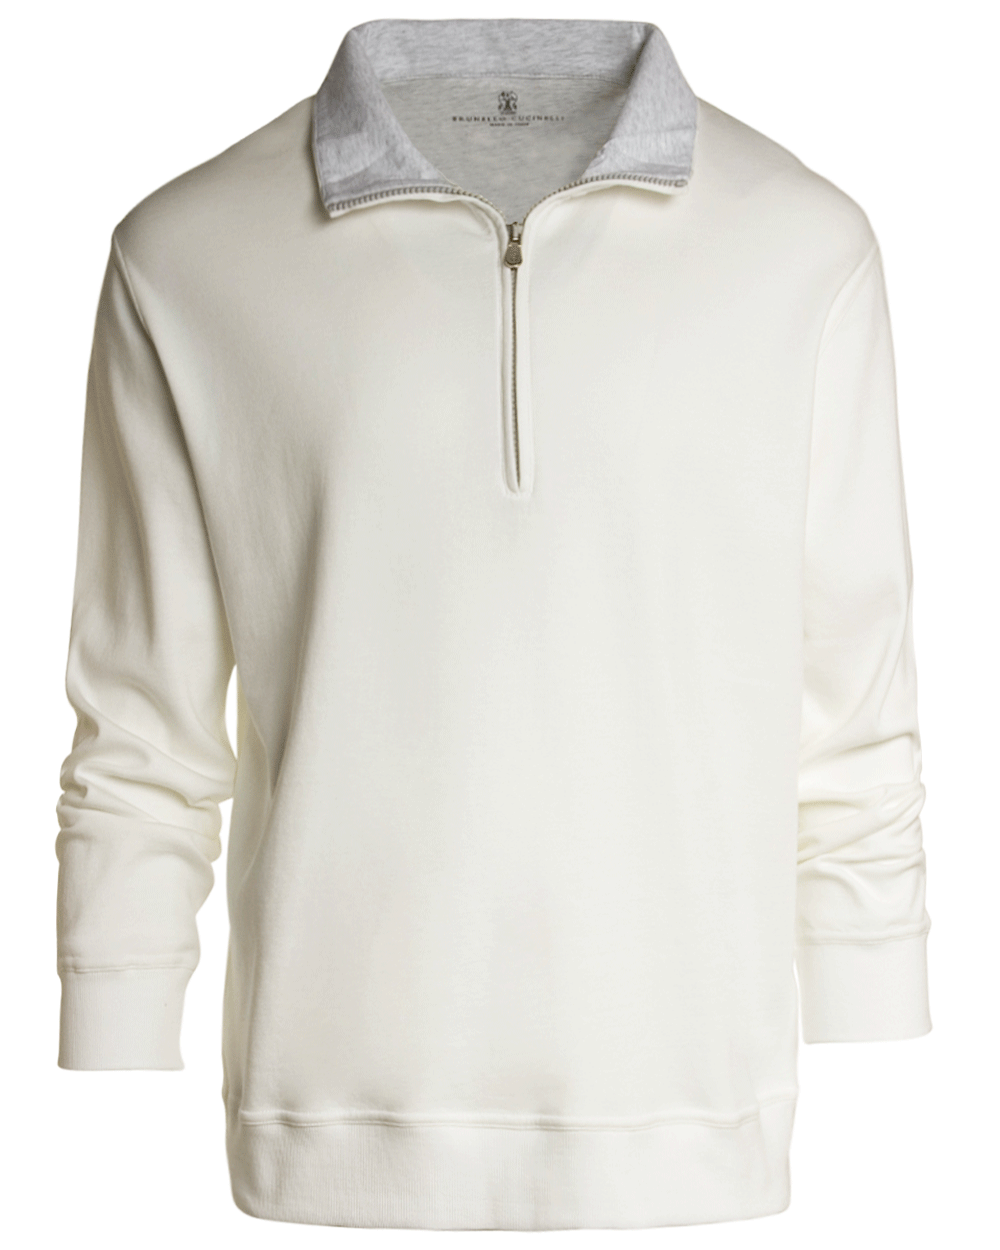 Off White Cotton Blend Quarter Zip Sweater